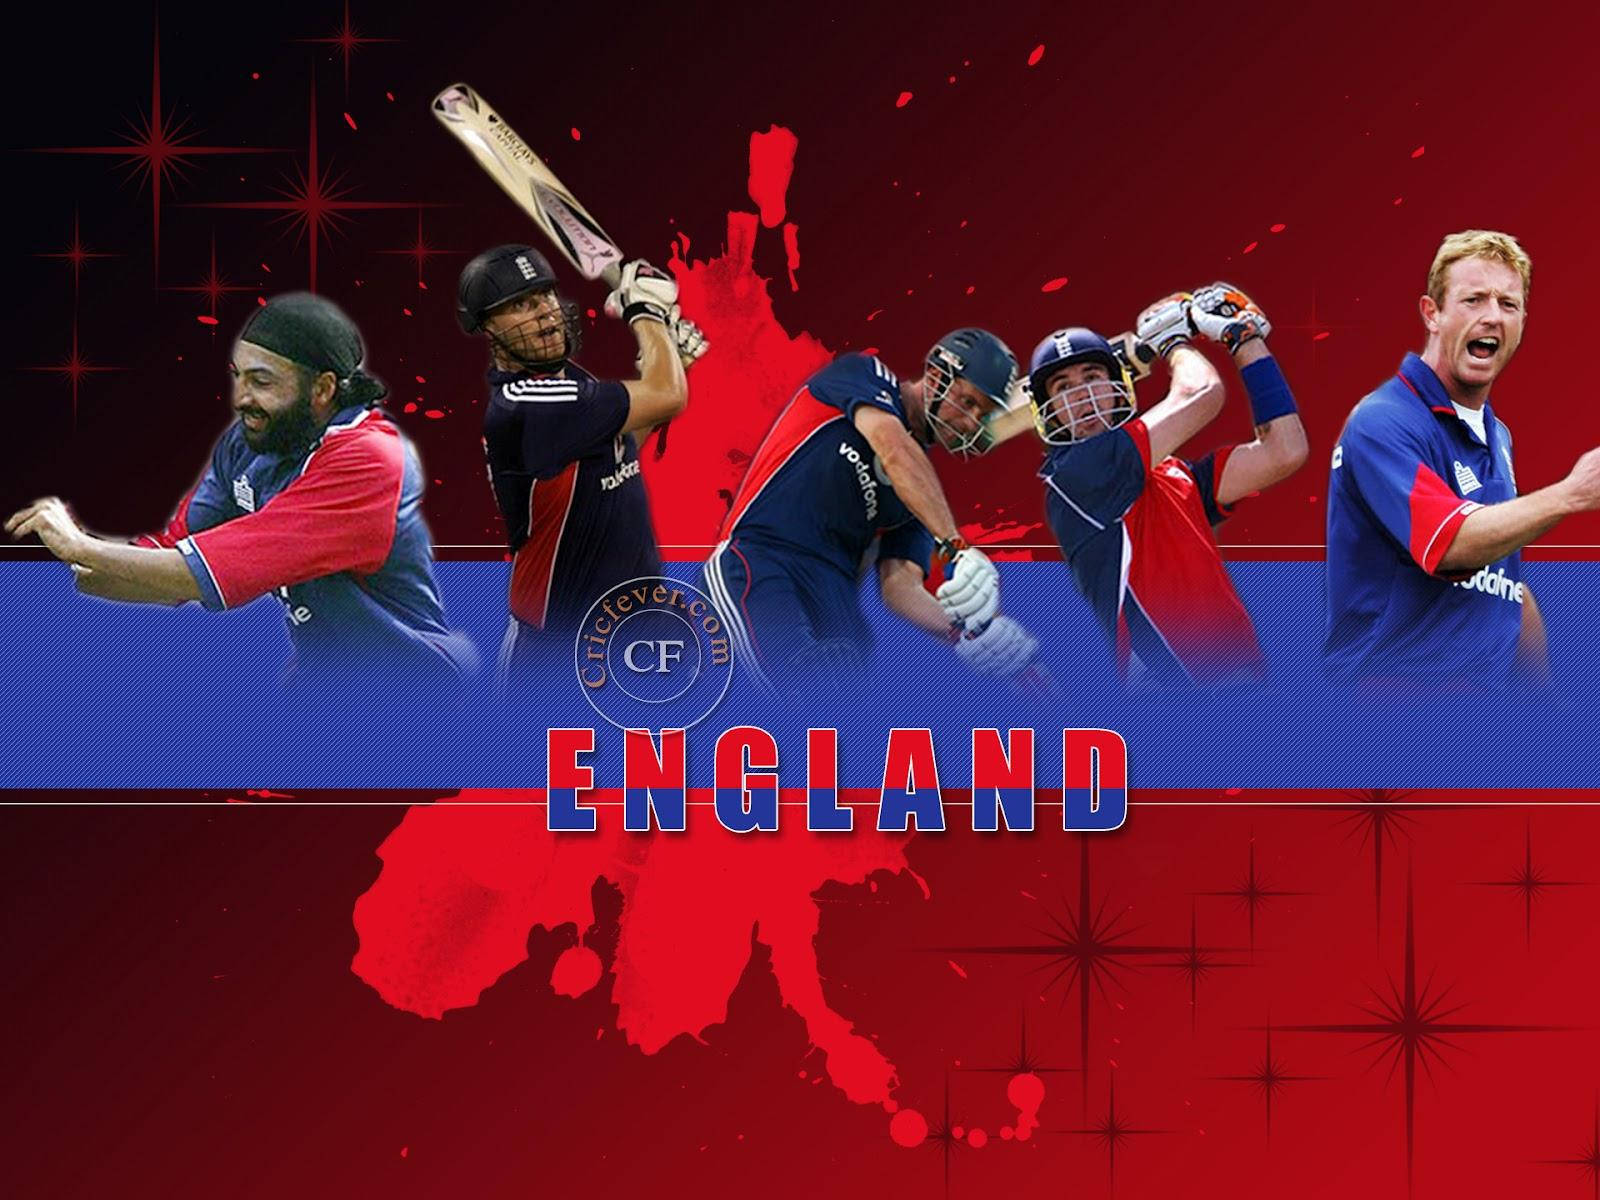 England Cricket Hold Spillere gjorde det godt under VM. Wallpaper